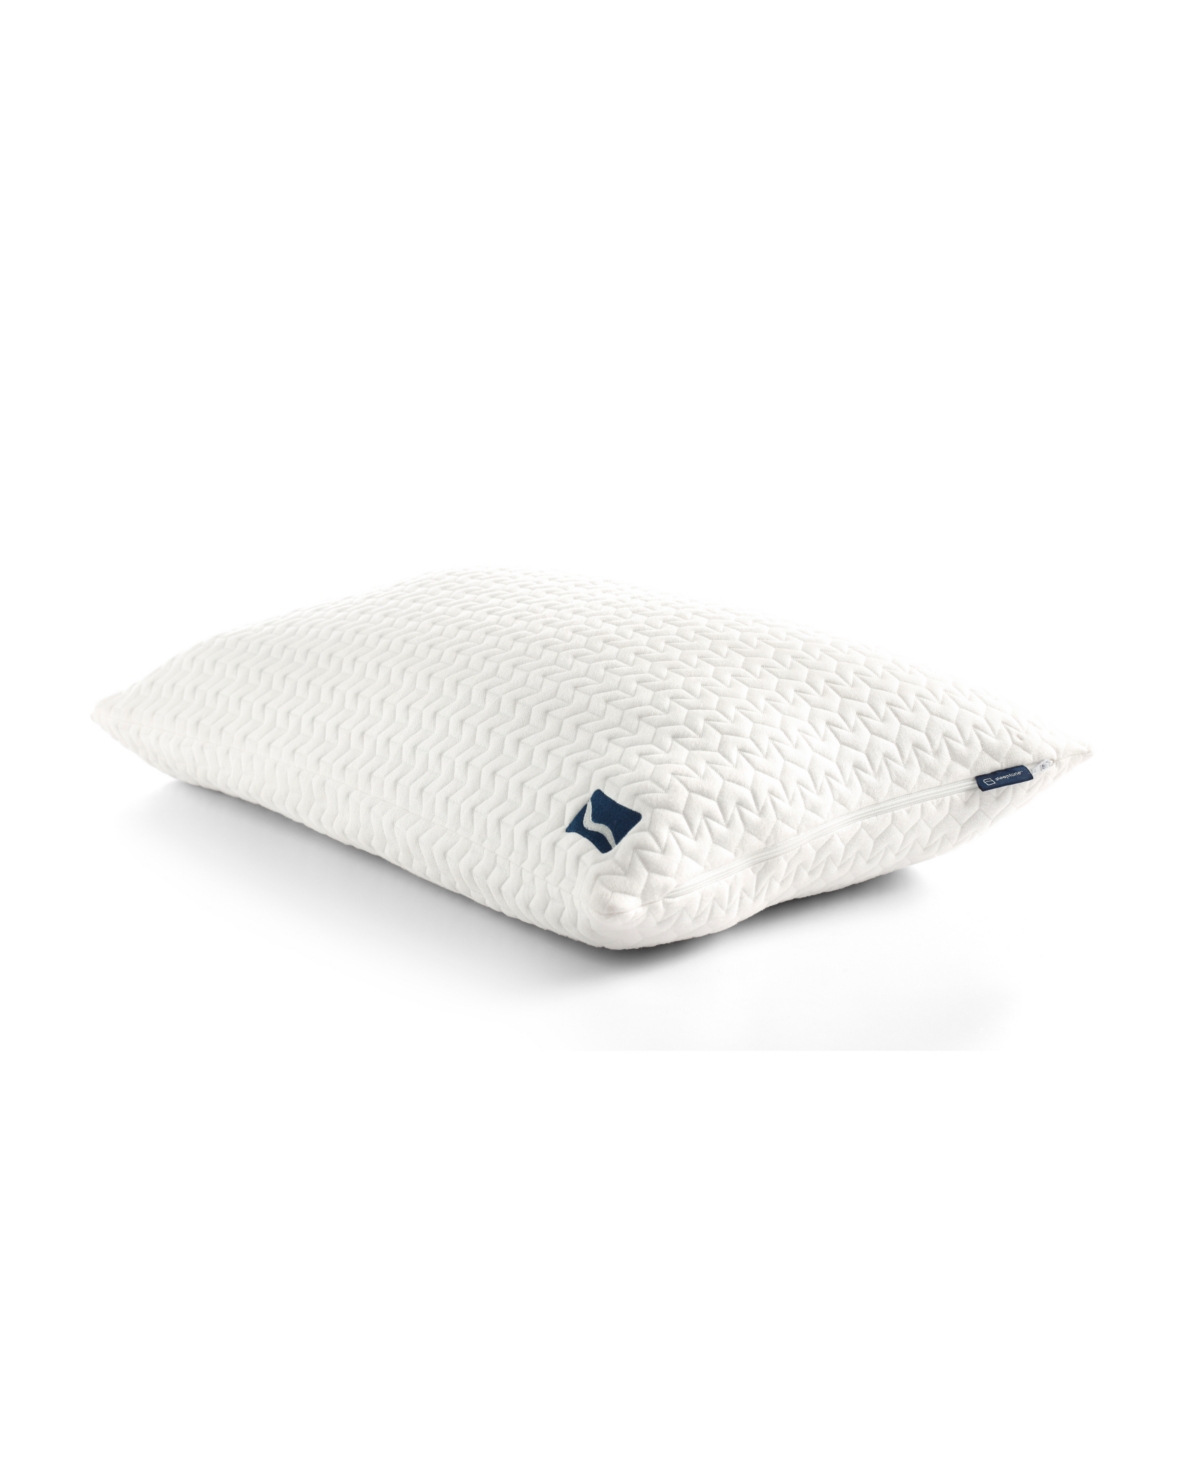 Sleeptone Innovative Multi Position Non-slip Adjustable Pillow, Queen In White